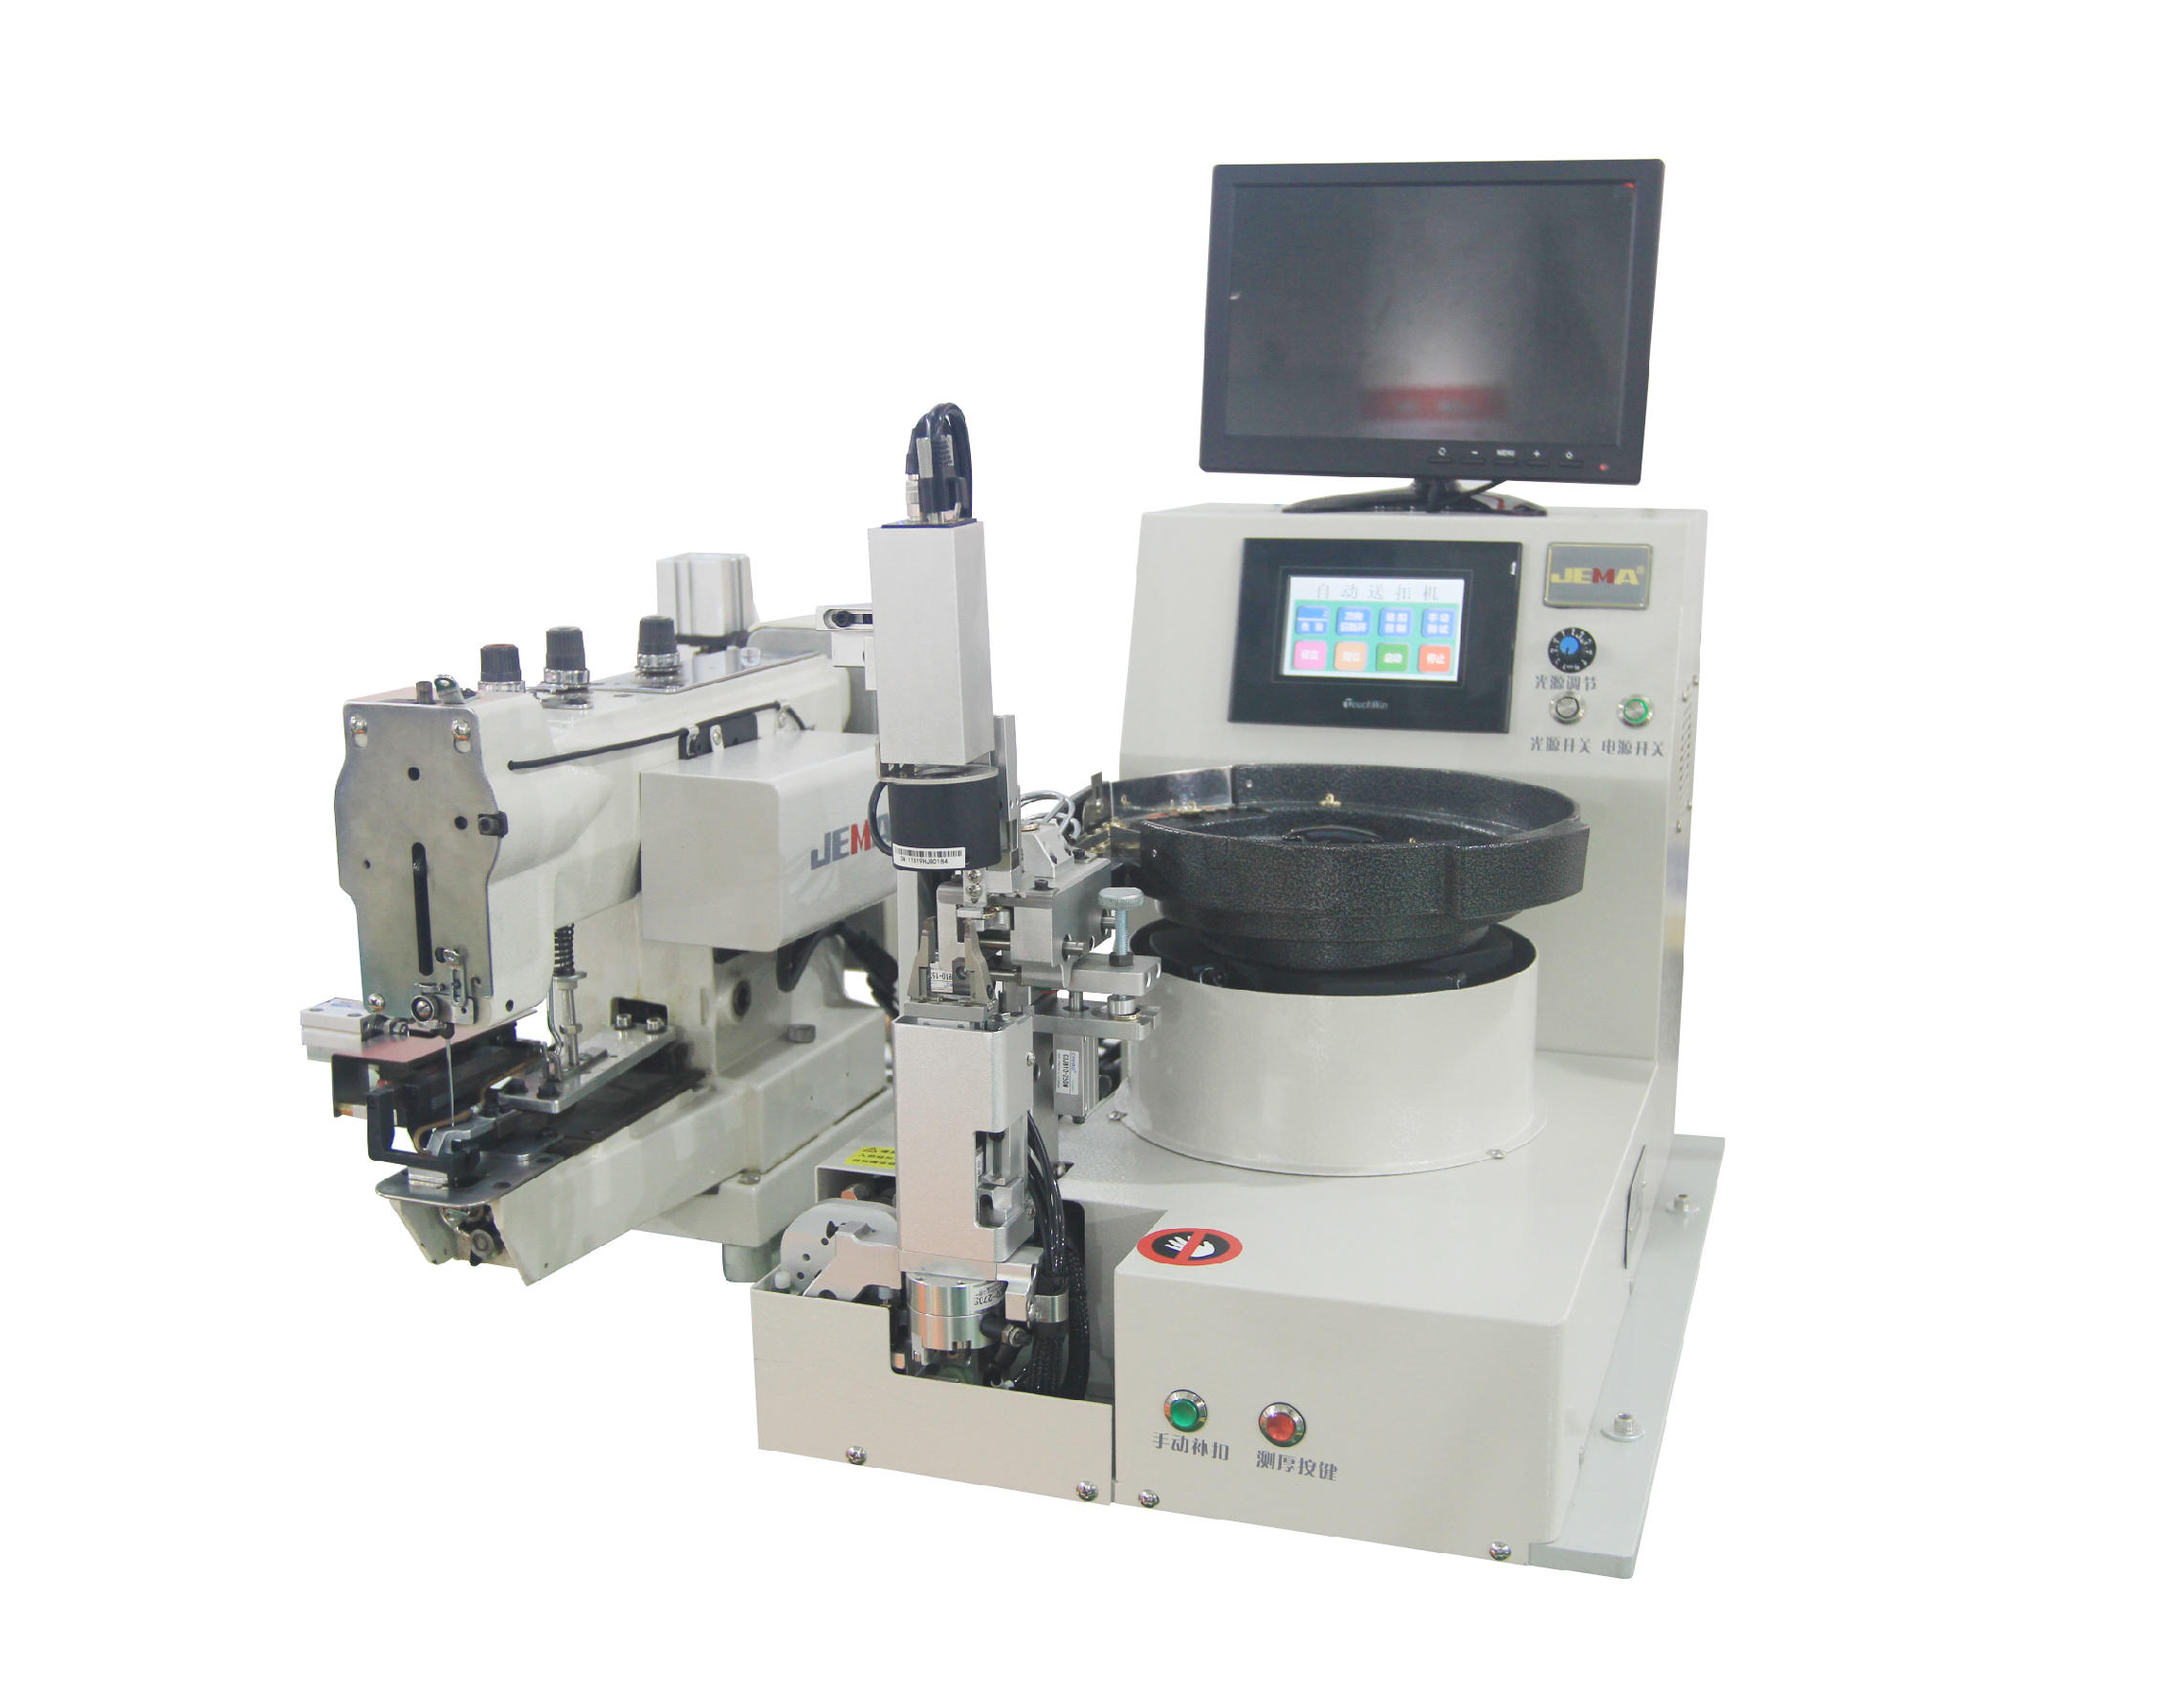 JM-917S LOGO recognition automatic button feeding machine (vertical button) with JM-4-2D direct drive buttoning machine